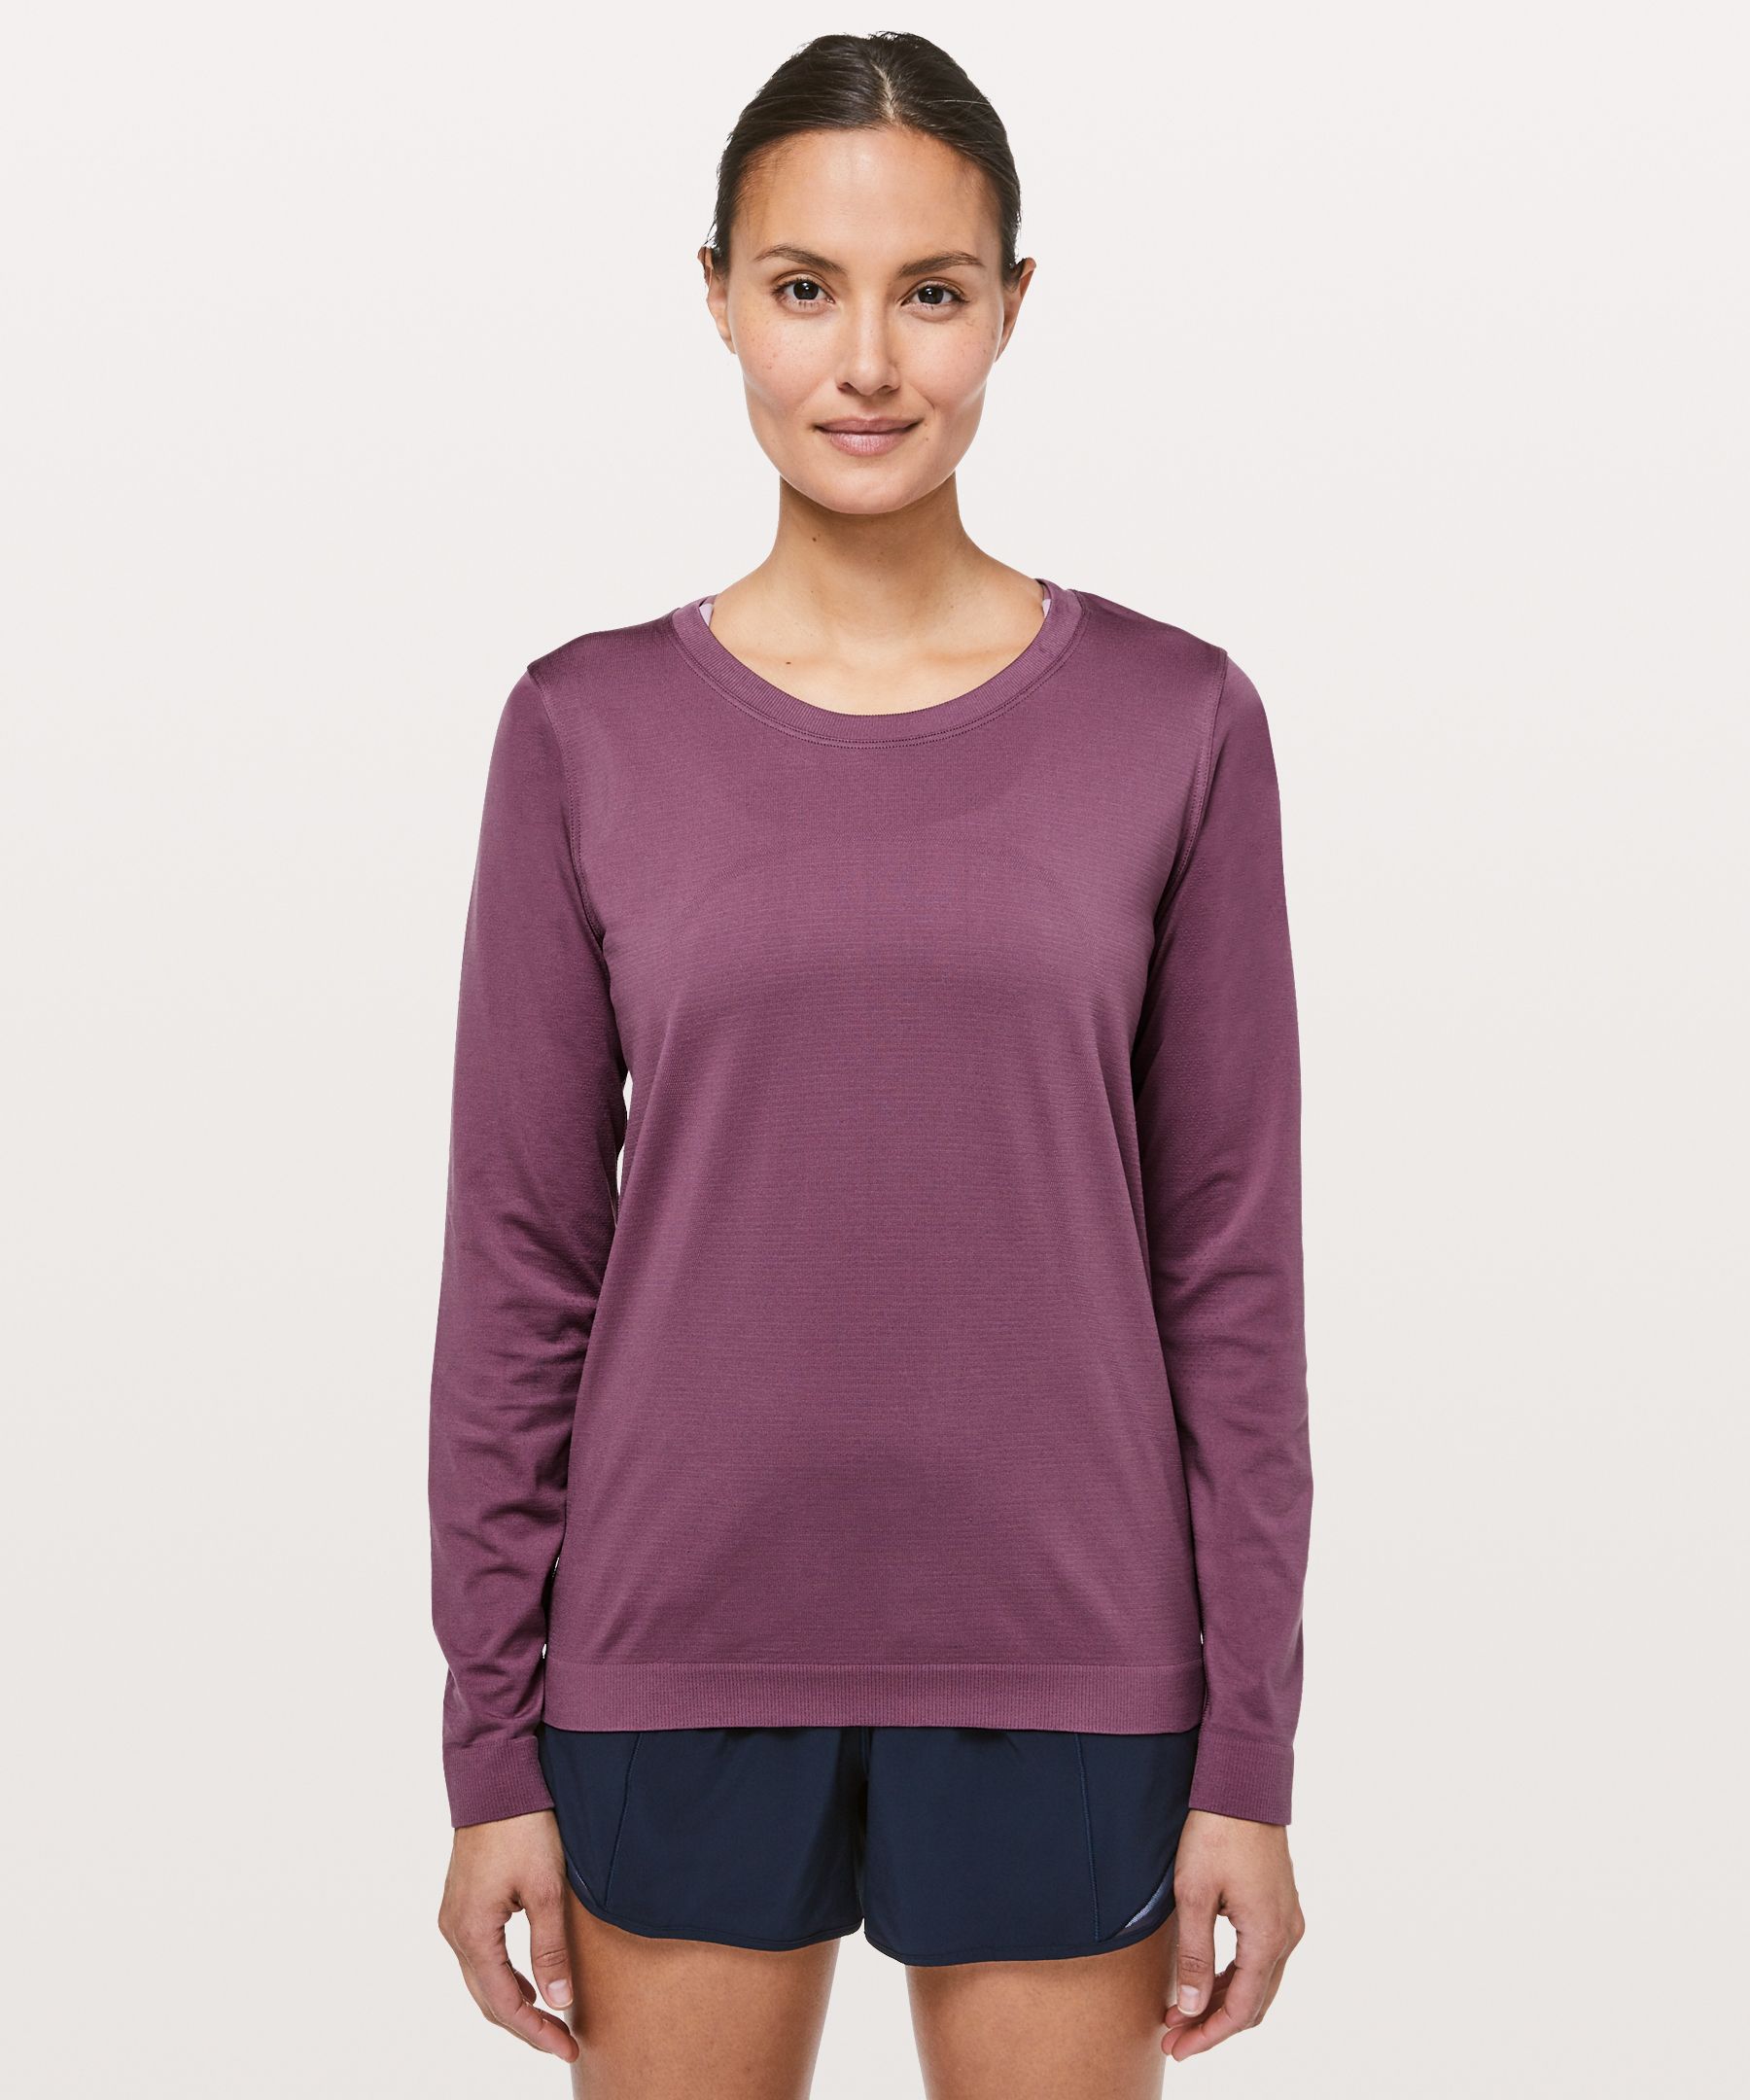 lululemon purple shirt